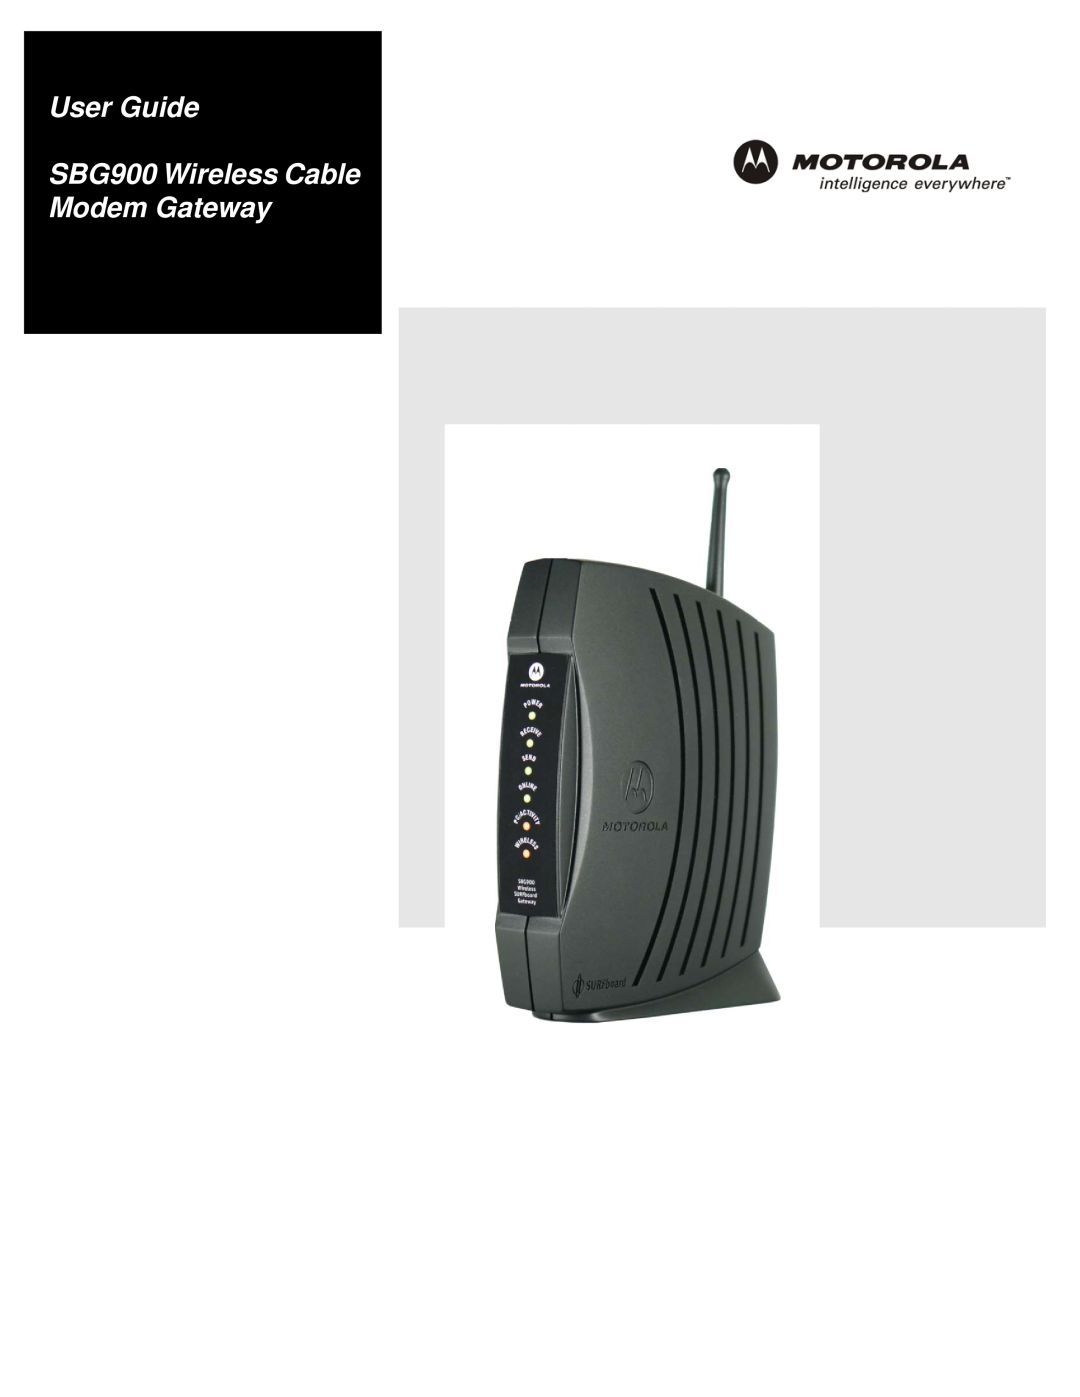 Motorola manual User Guide SBG900 Wireless Cable Modem Gateway 